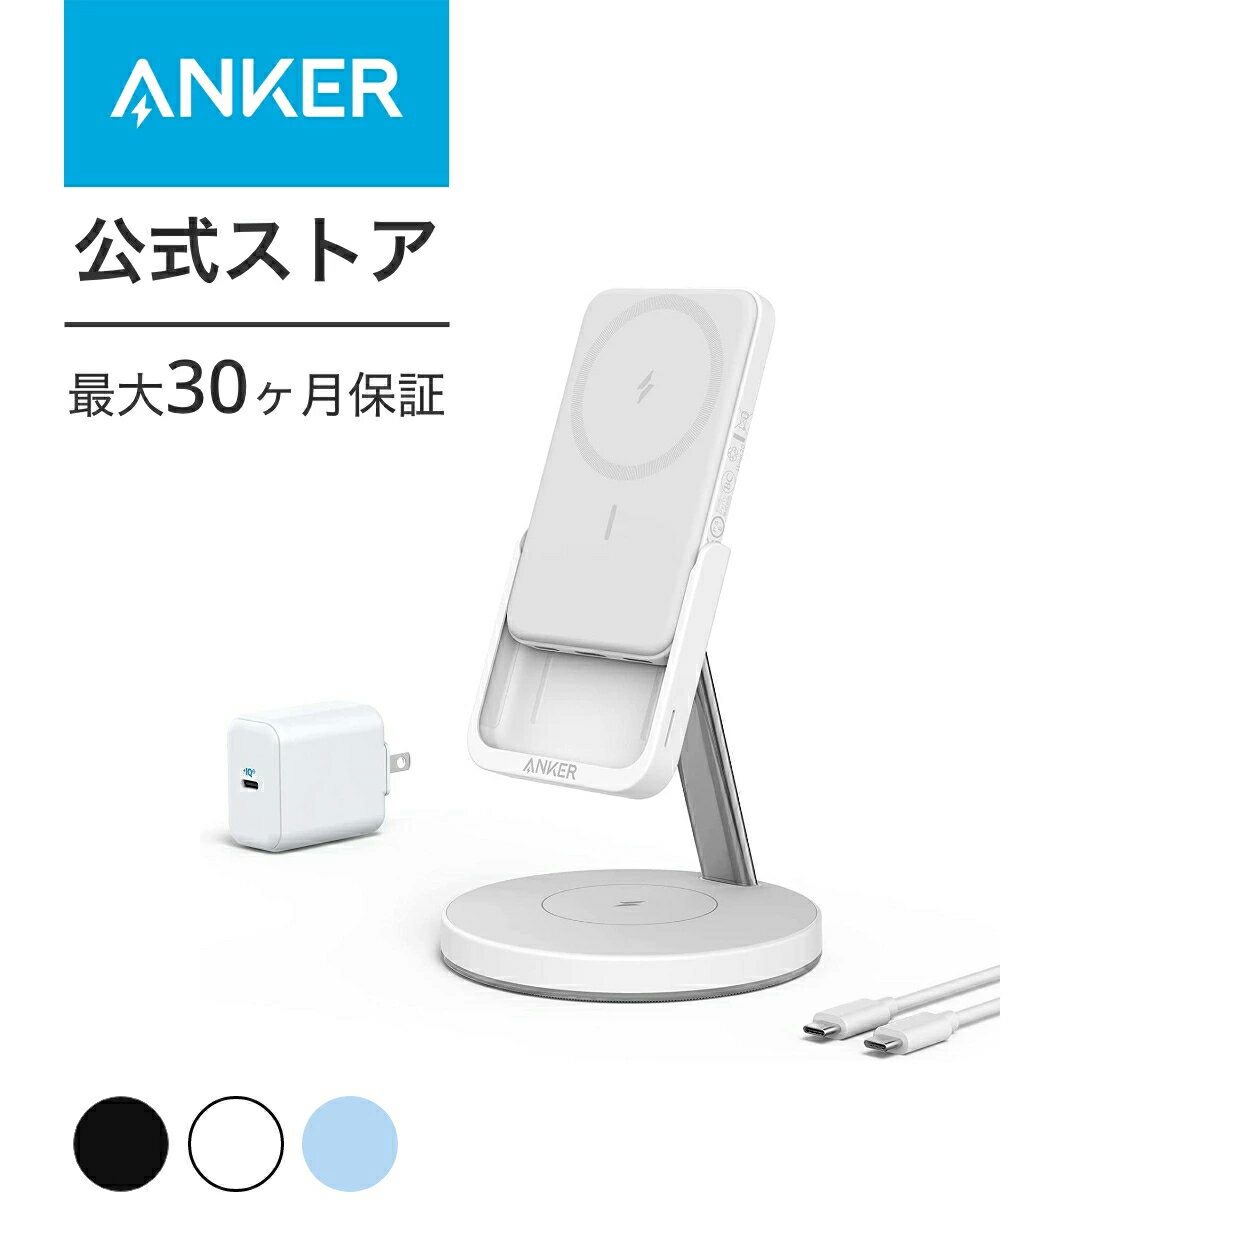 Anker 633 Magnetic Wireless Charger (MagGo)(マグネット式 2-in-1 ワイヤレス充電ステーション)【モバイルバッテリー機能搭載 / 5000mAh / USB急速充電器付属 / マグネット式 / ワイヤレス出力 (7.5W) / PSE】